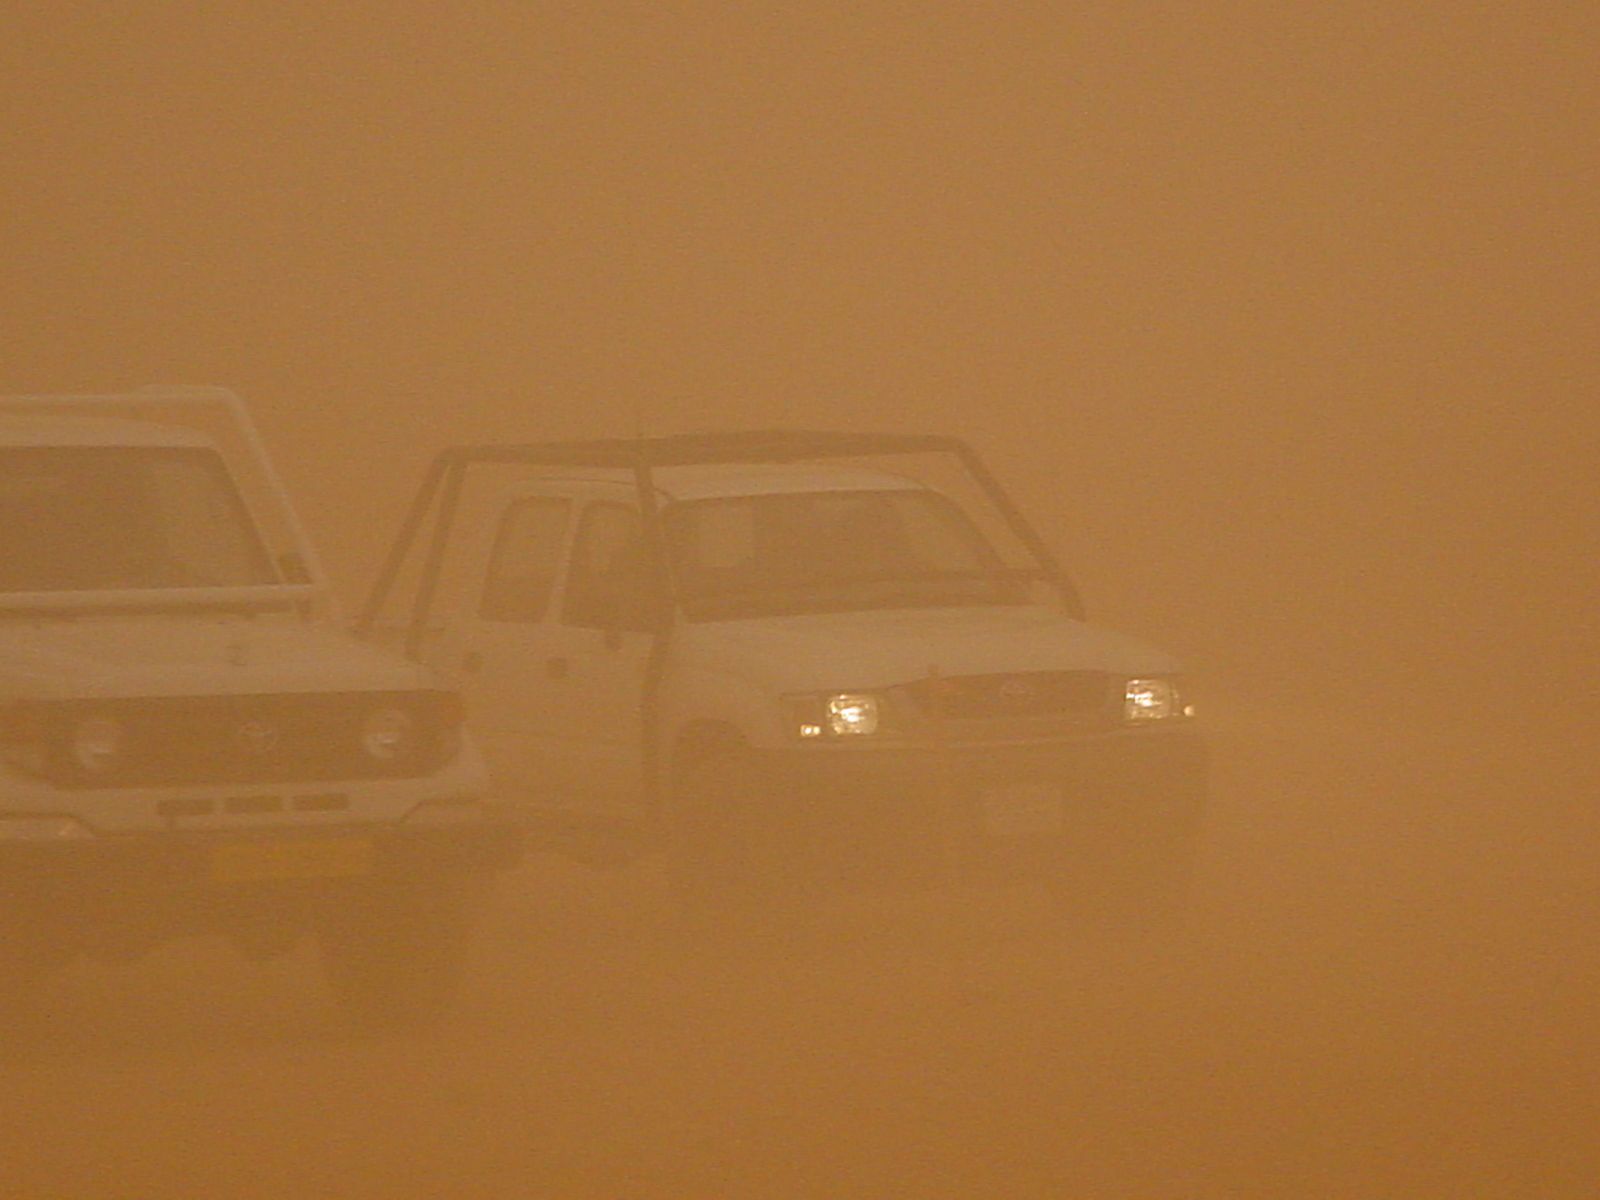 sandstorm 037.jpg